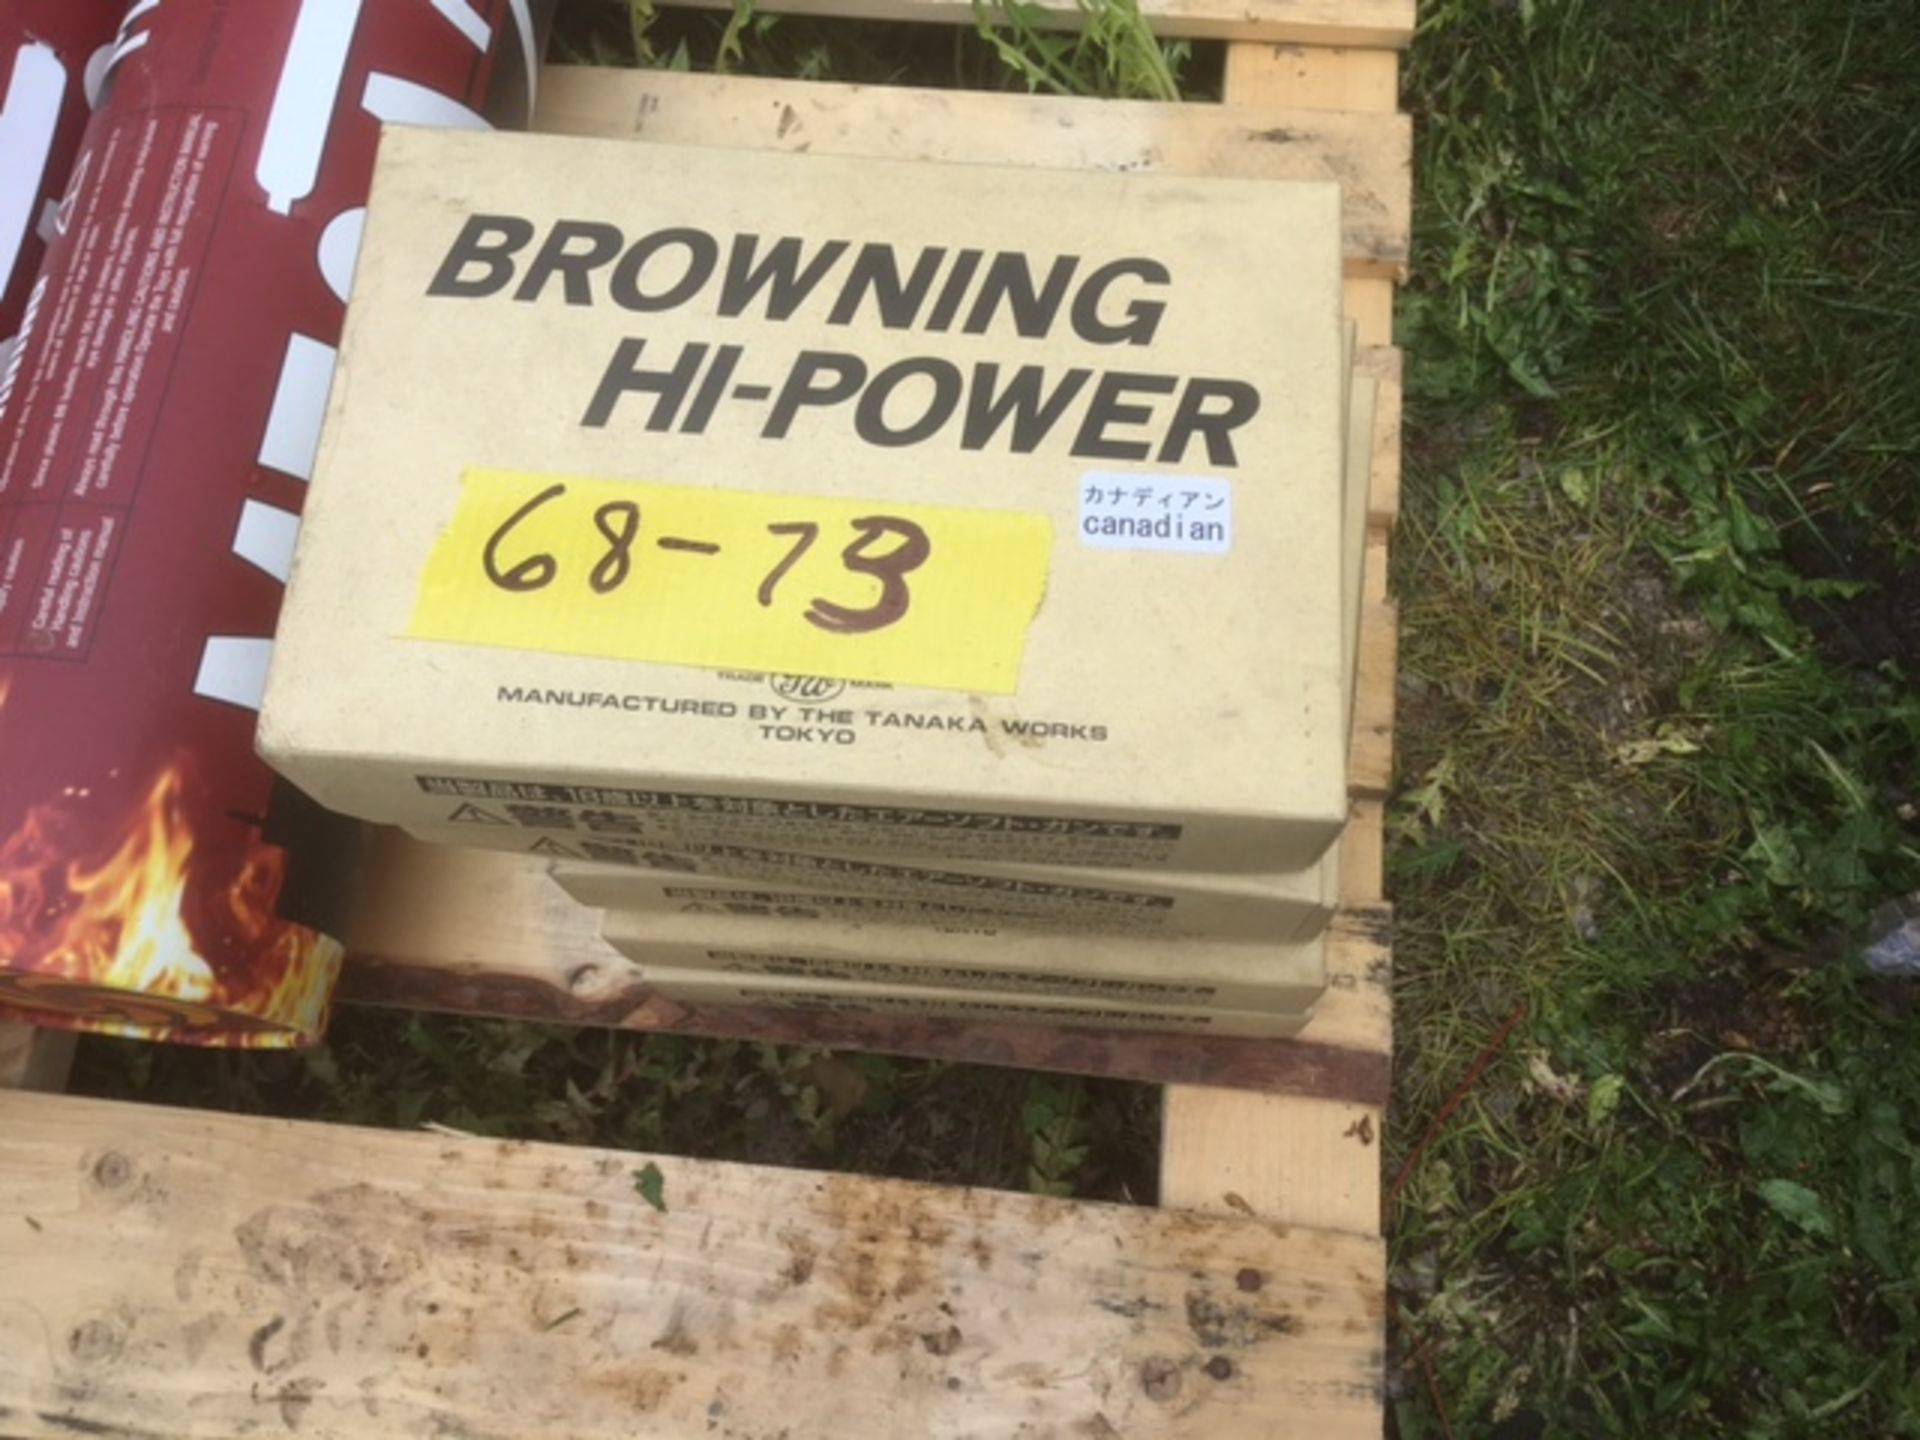 Browning Hi Power Canadian Soft Air